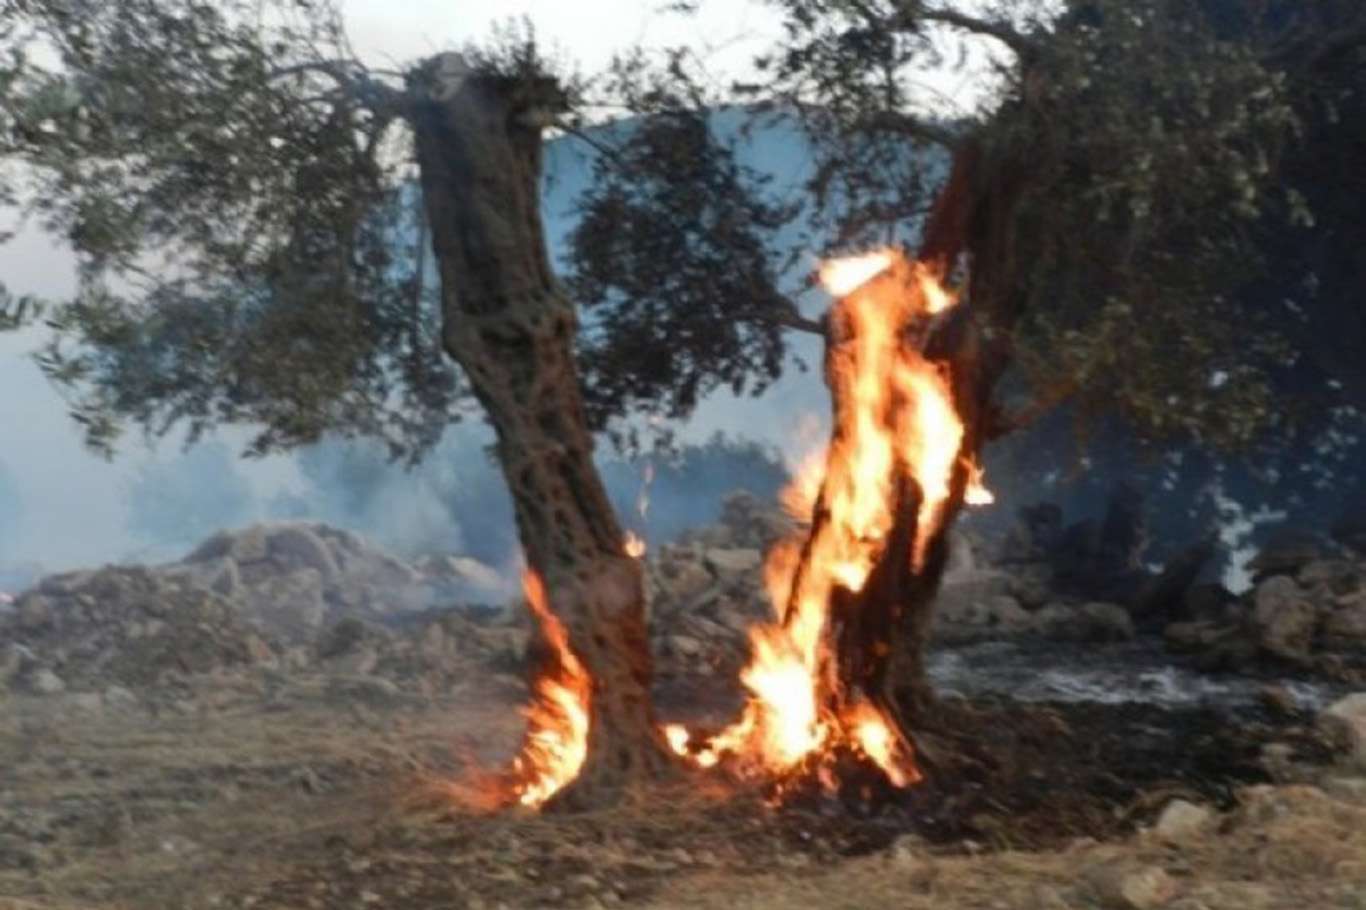 Palestine: Zionist settlers torch dozens of olive trees on Mount Sobeih